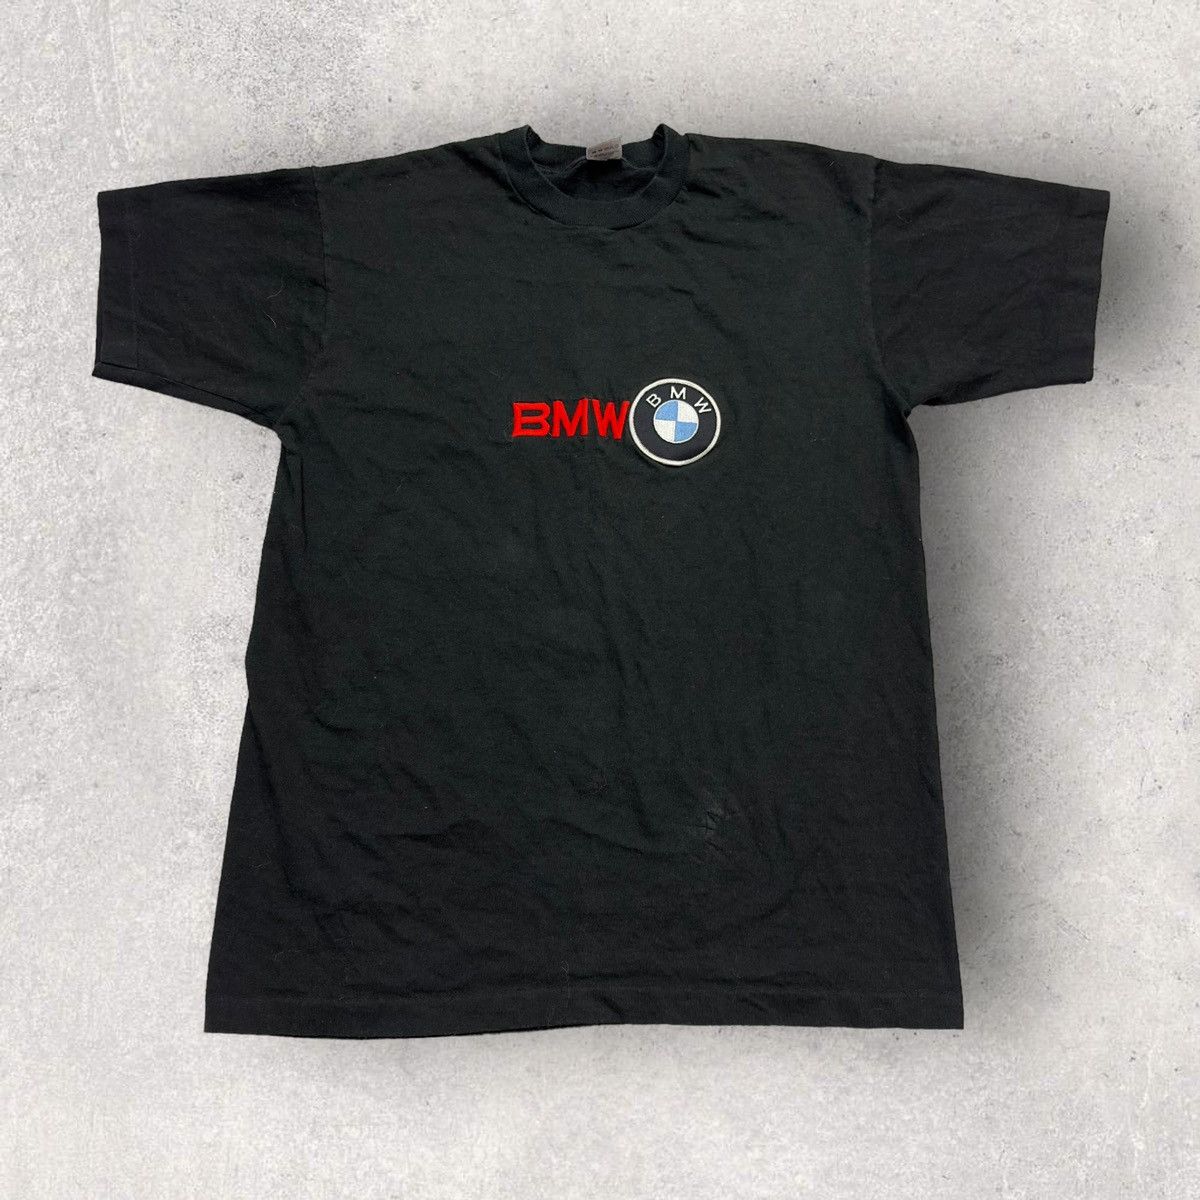 Vintage Bmw T Shirt | Grailed